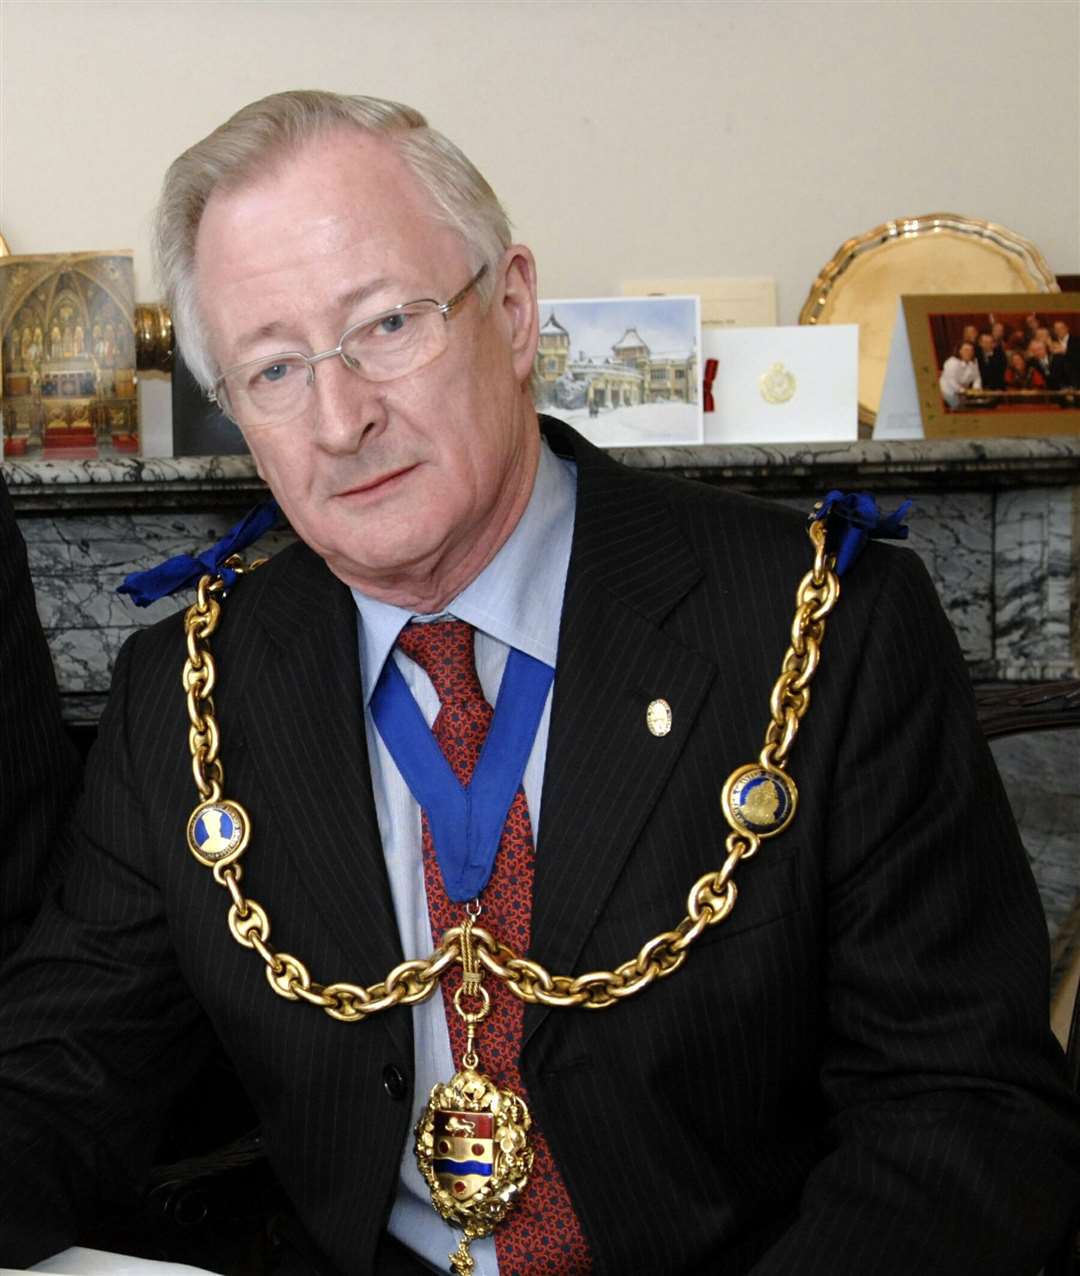 Cllr Richard Ash when he was Mayor of Maidstone